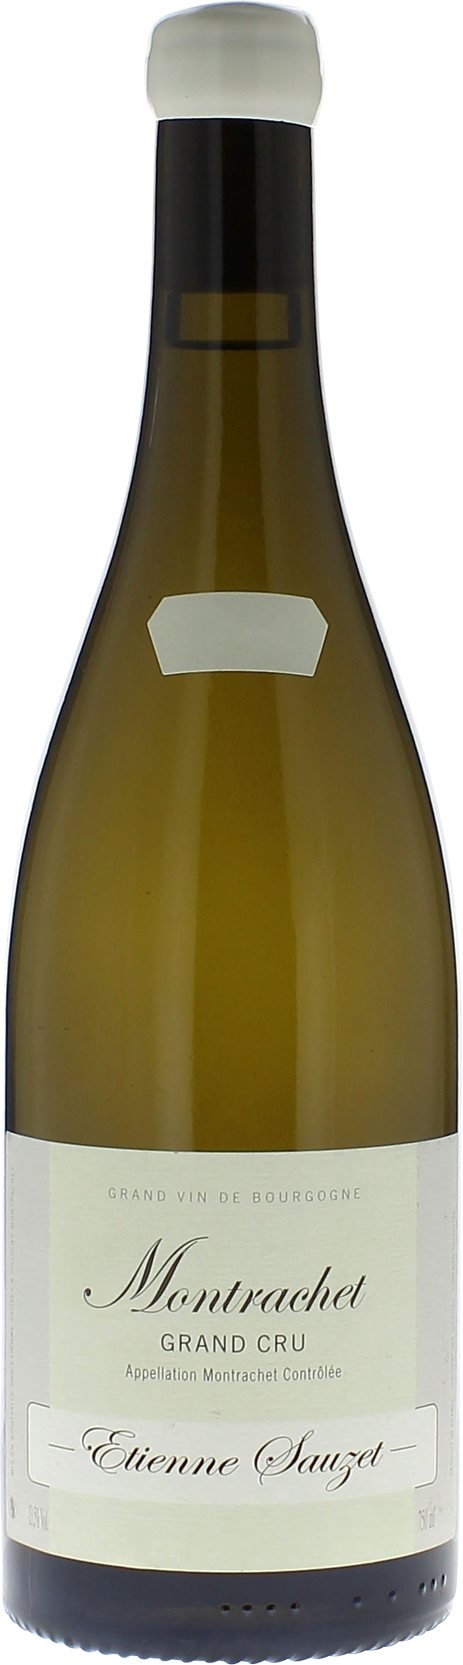 Montrachet grand cru 2018 Domaine SAUZET, Bourgogne blanc